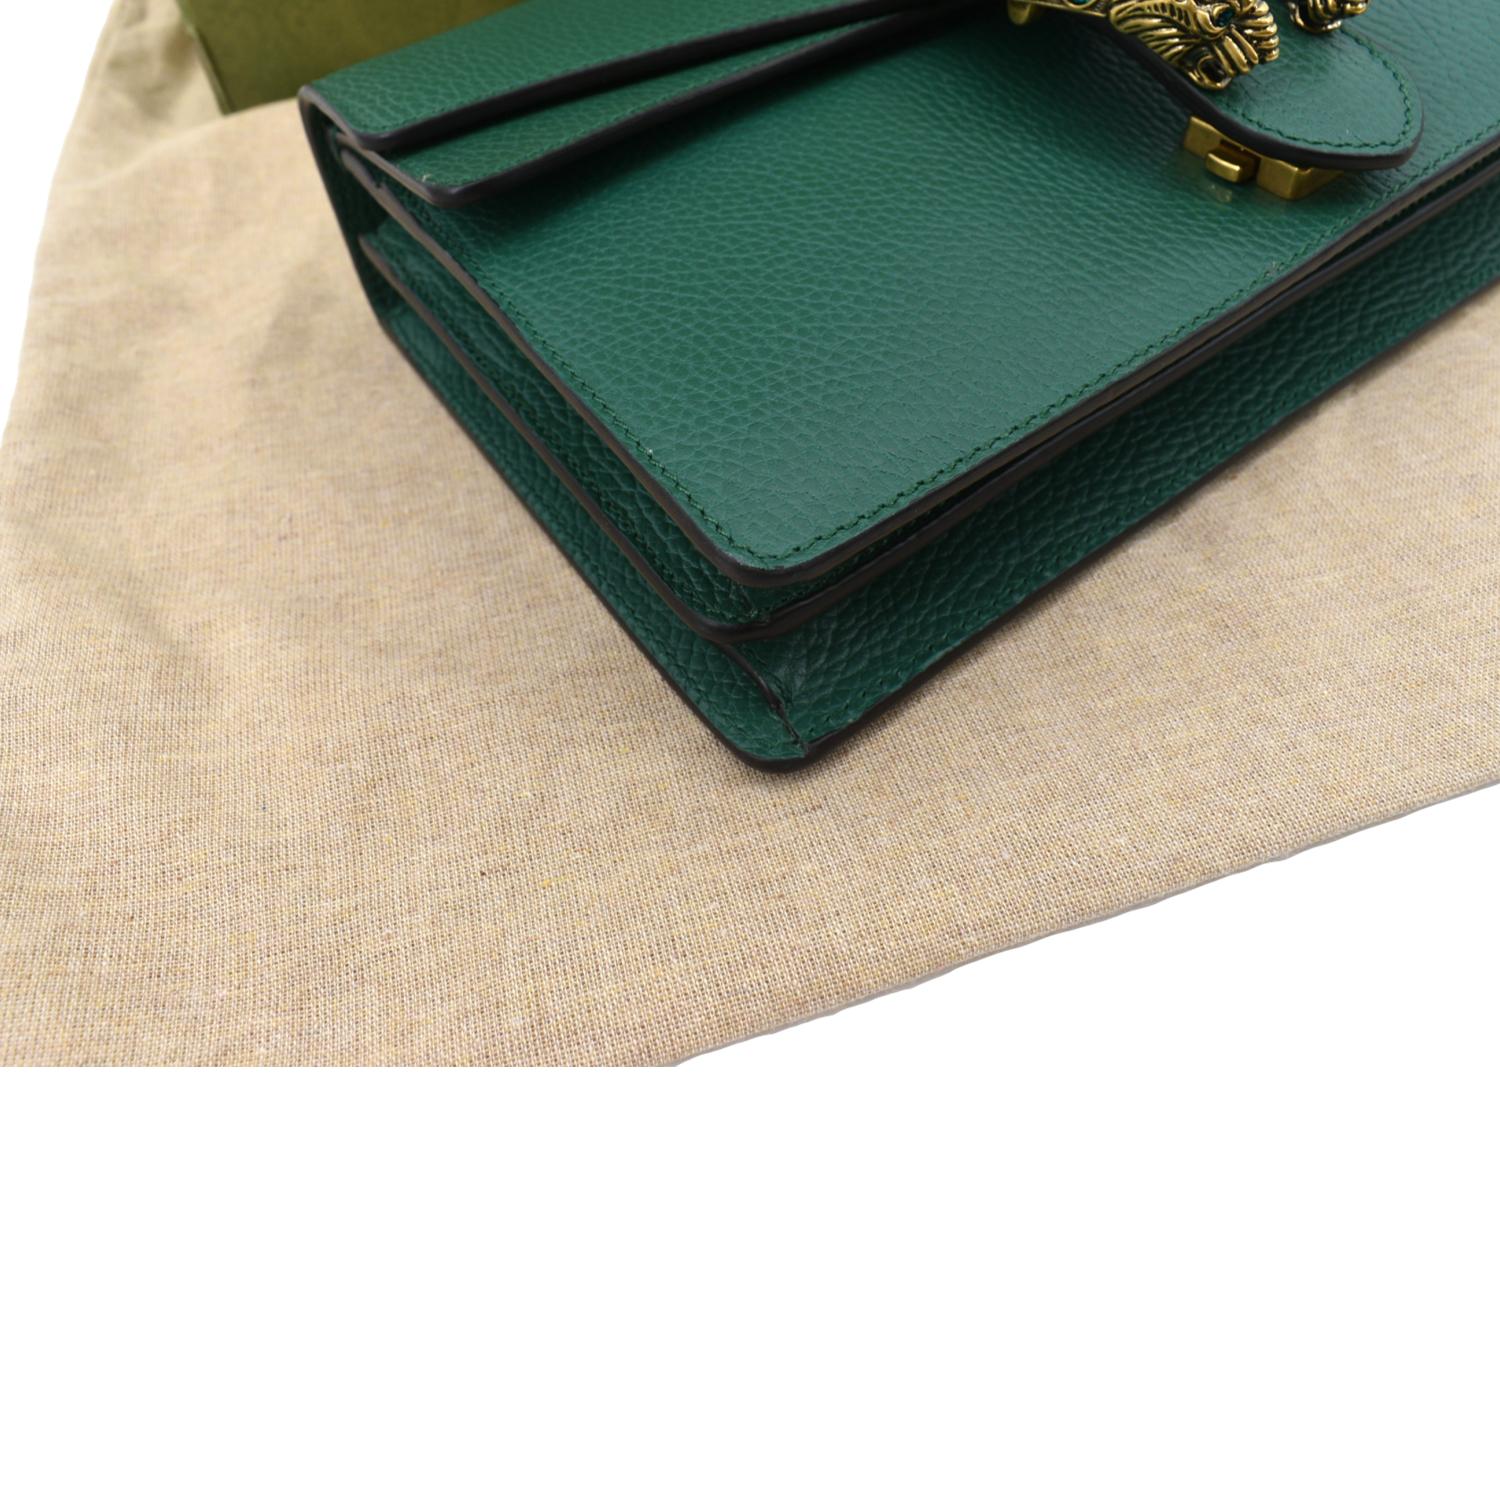 Dionysus mini top handle bag in dark green leather